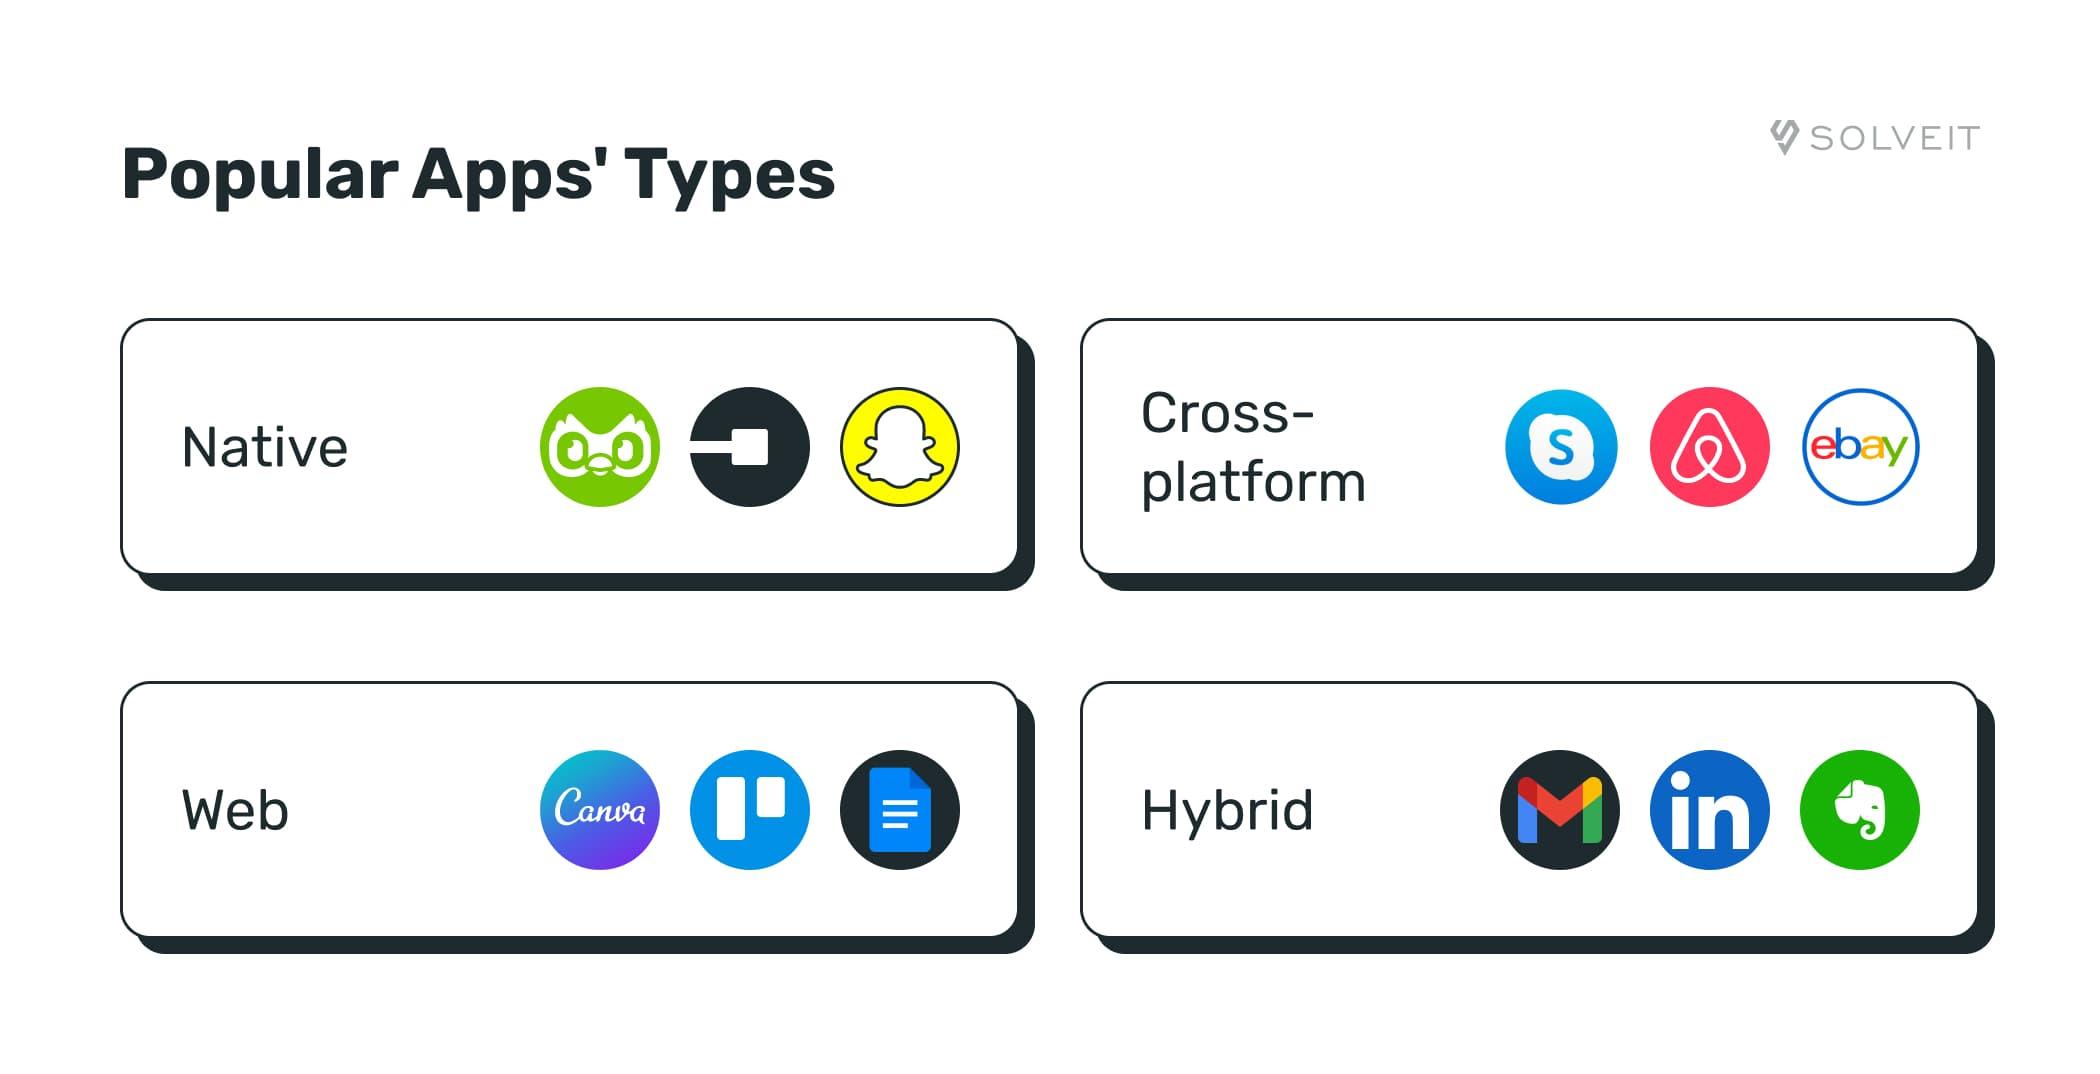 Popular Apps' Types: Native, Cross-platform, Hybrid, Web